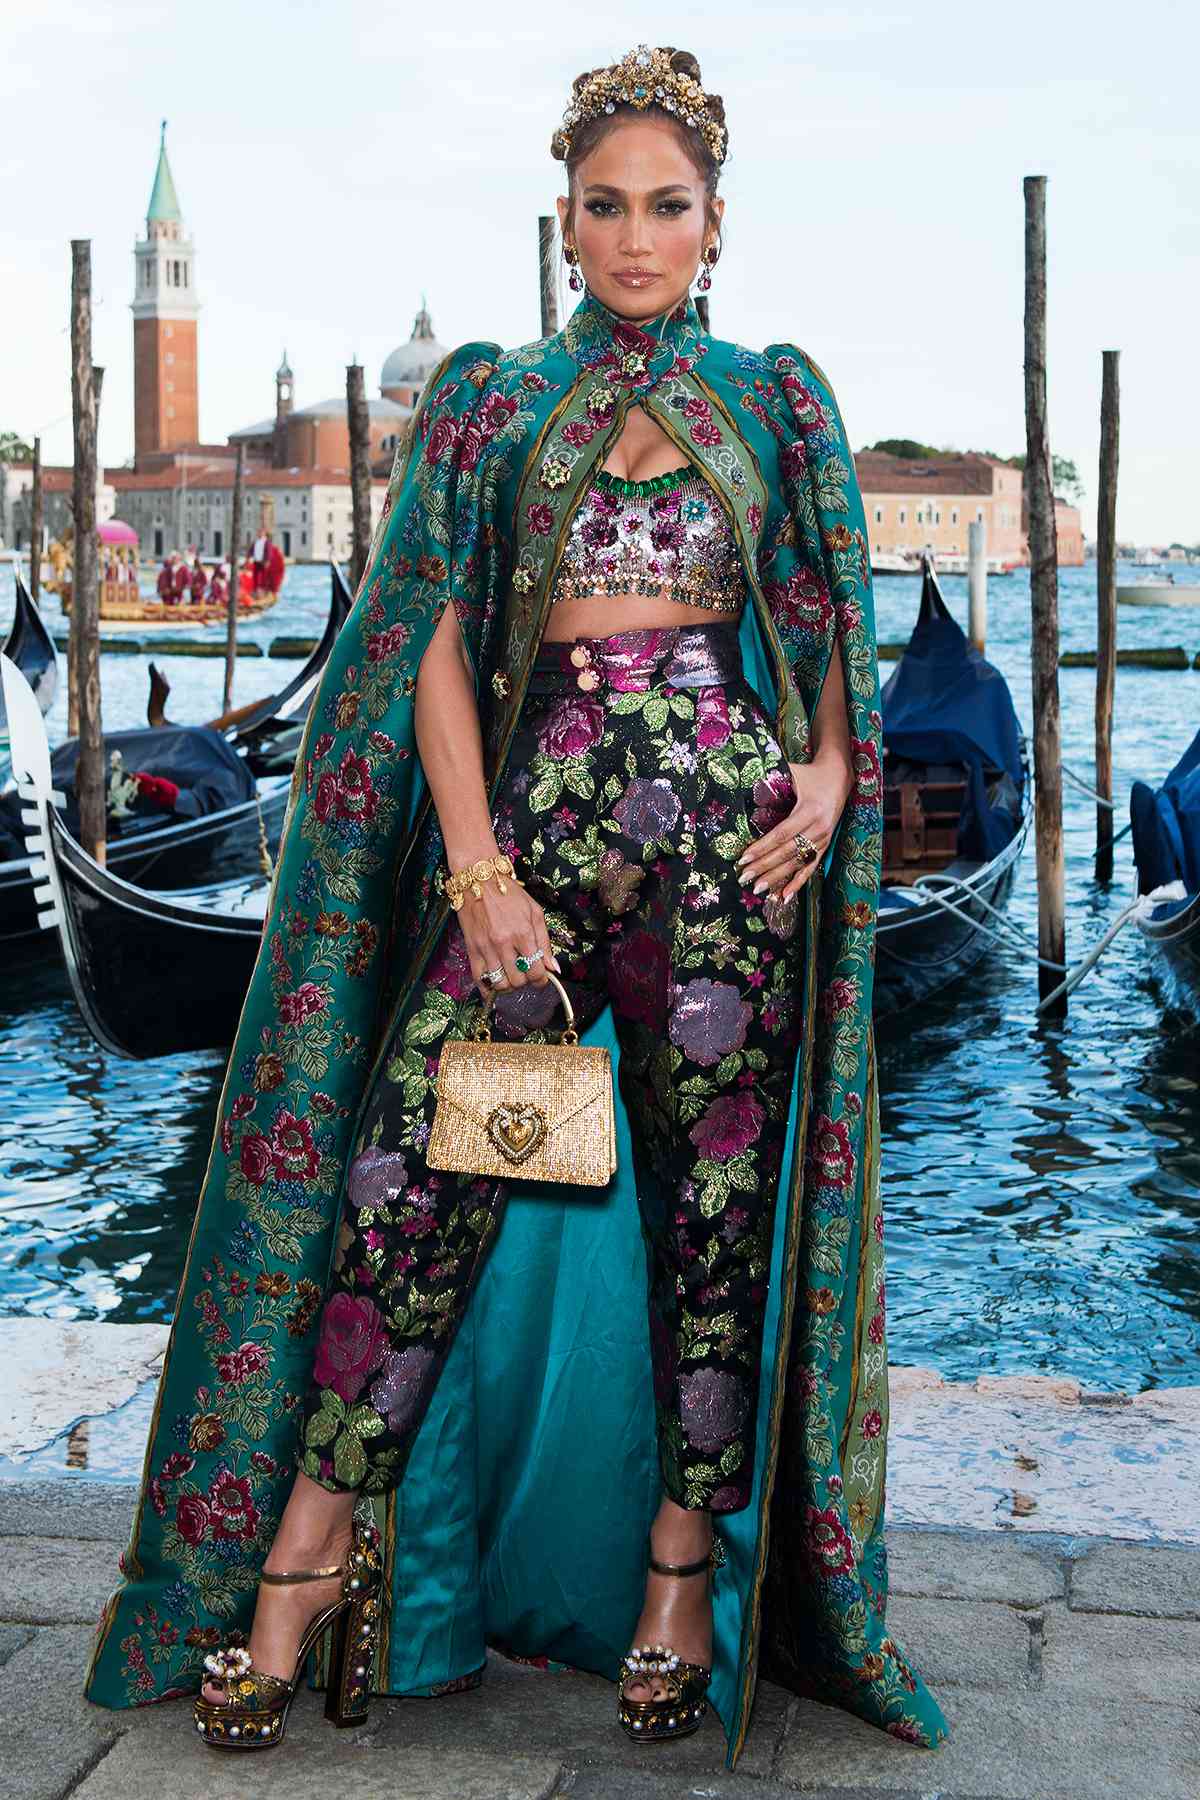 Dolce&Gabbana Alta Moda Women’s Show in Venice, Italy on Sunday August 29th.